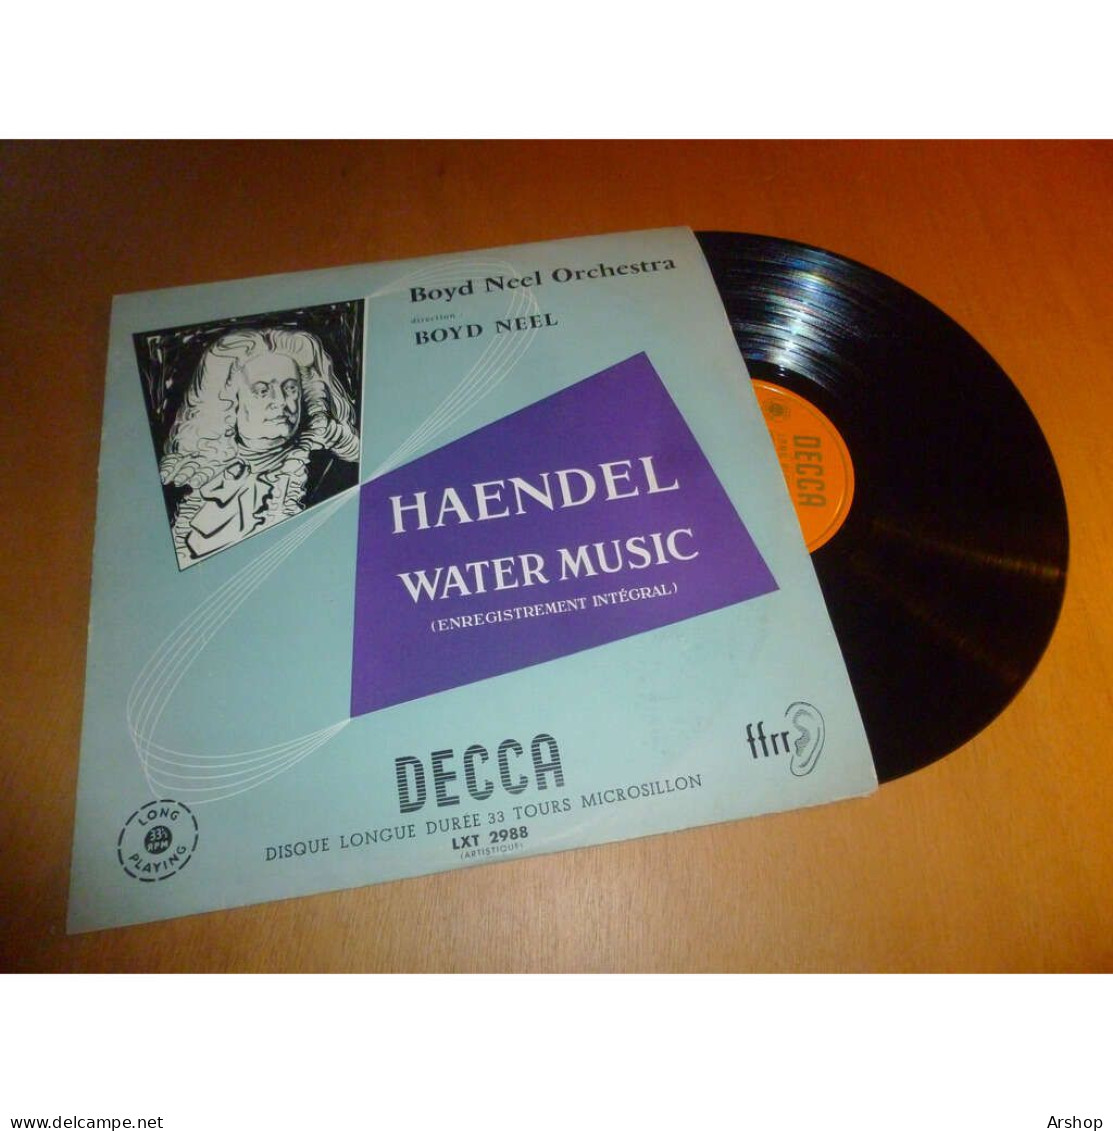 BOYD NEEL ORCHESTRA Water Music HAENDEL - DECCA France LXT 2988 Lp - Klassik